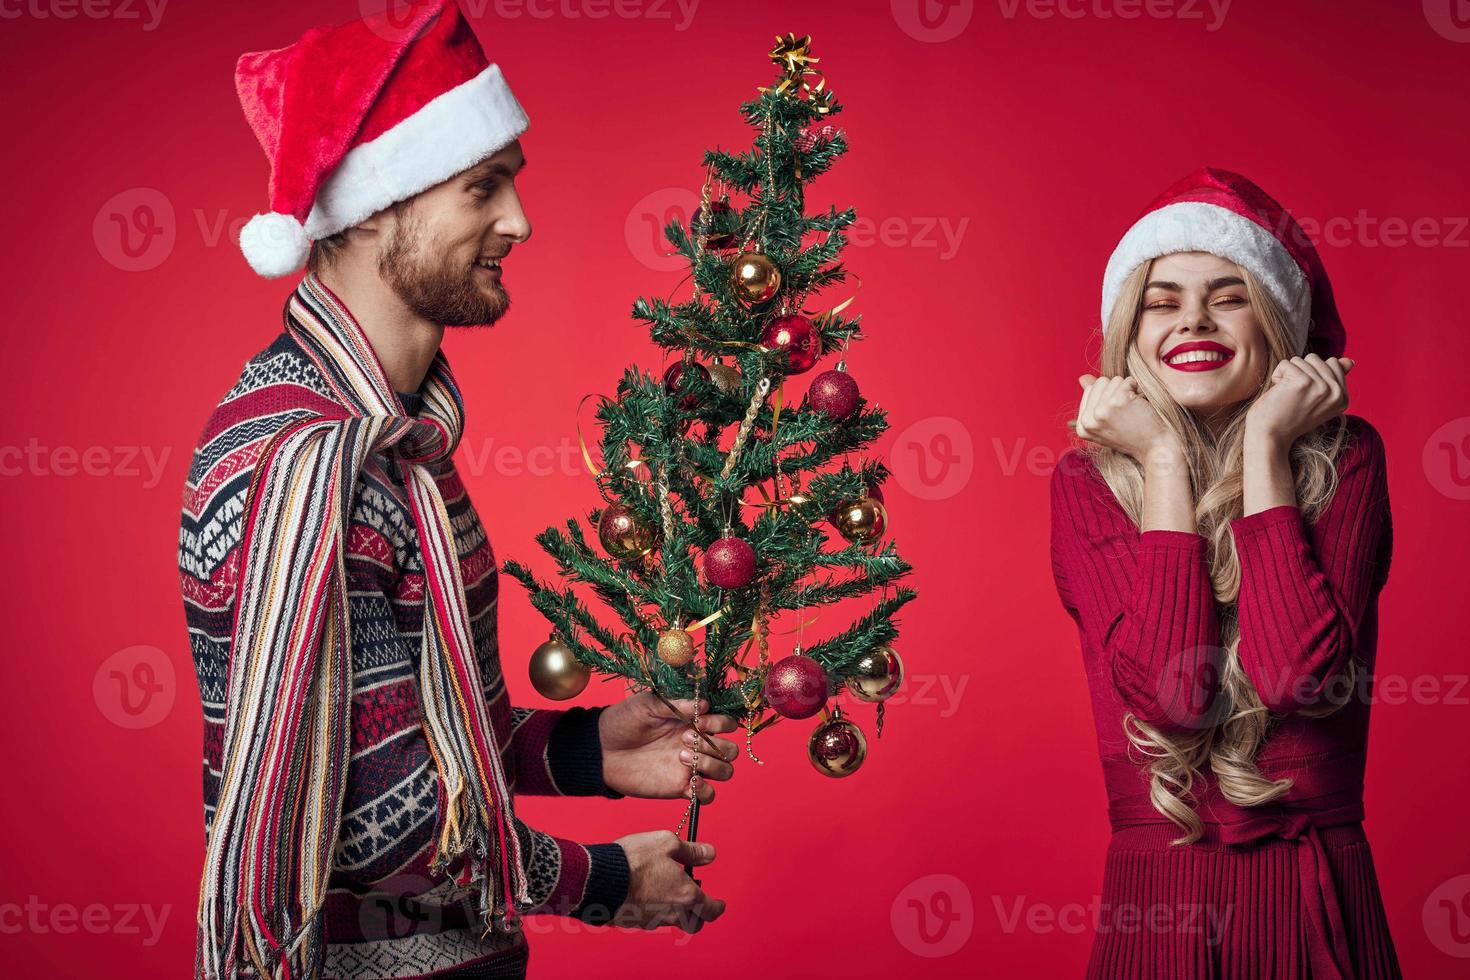 woman next to man family portrait christmas tree decoration holiday photo